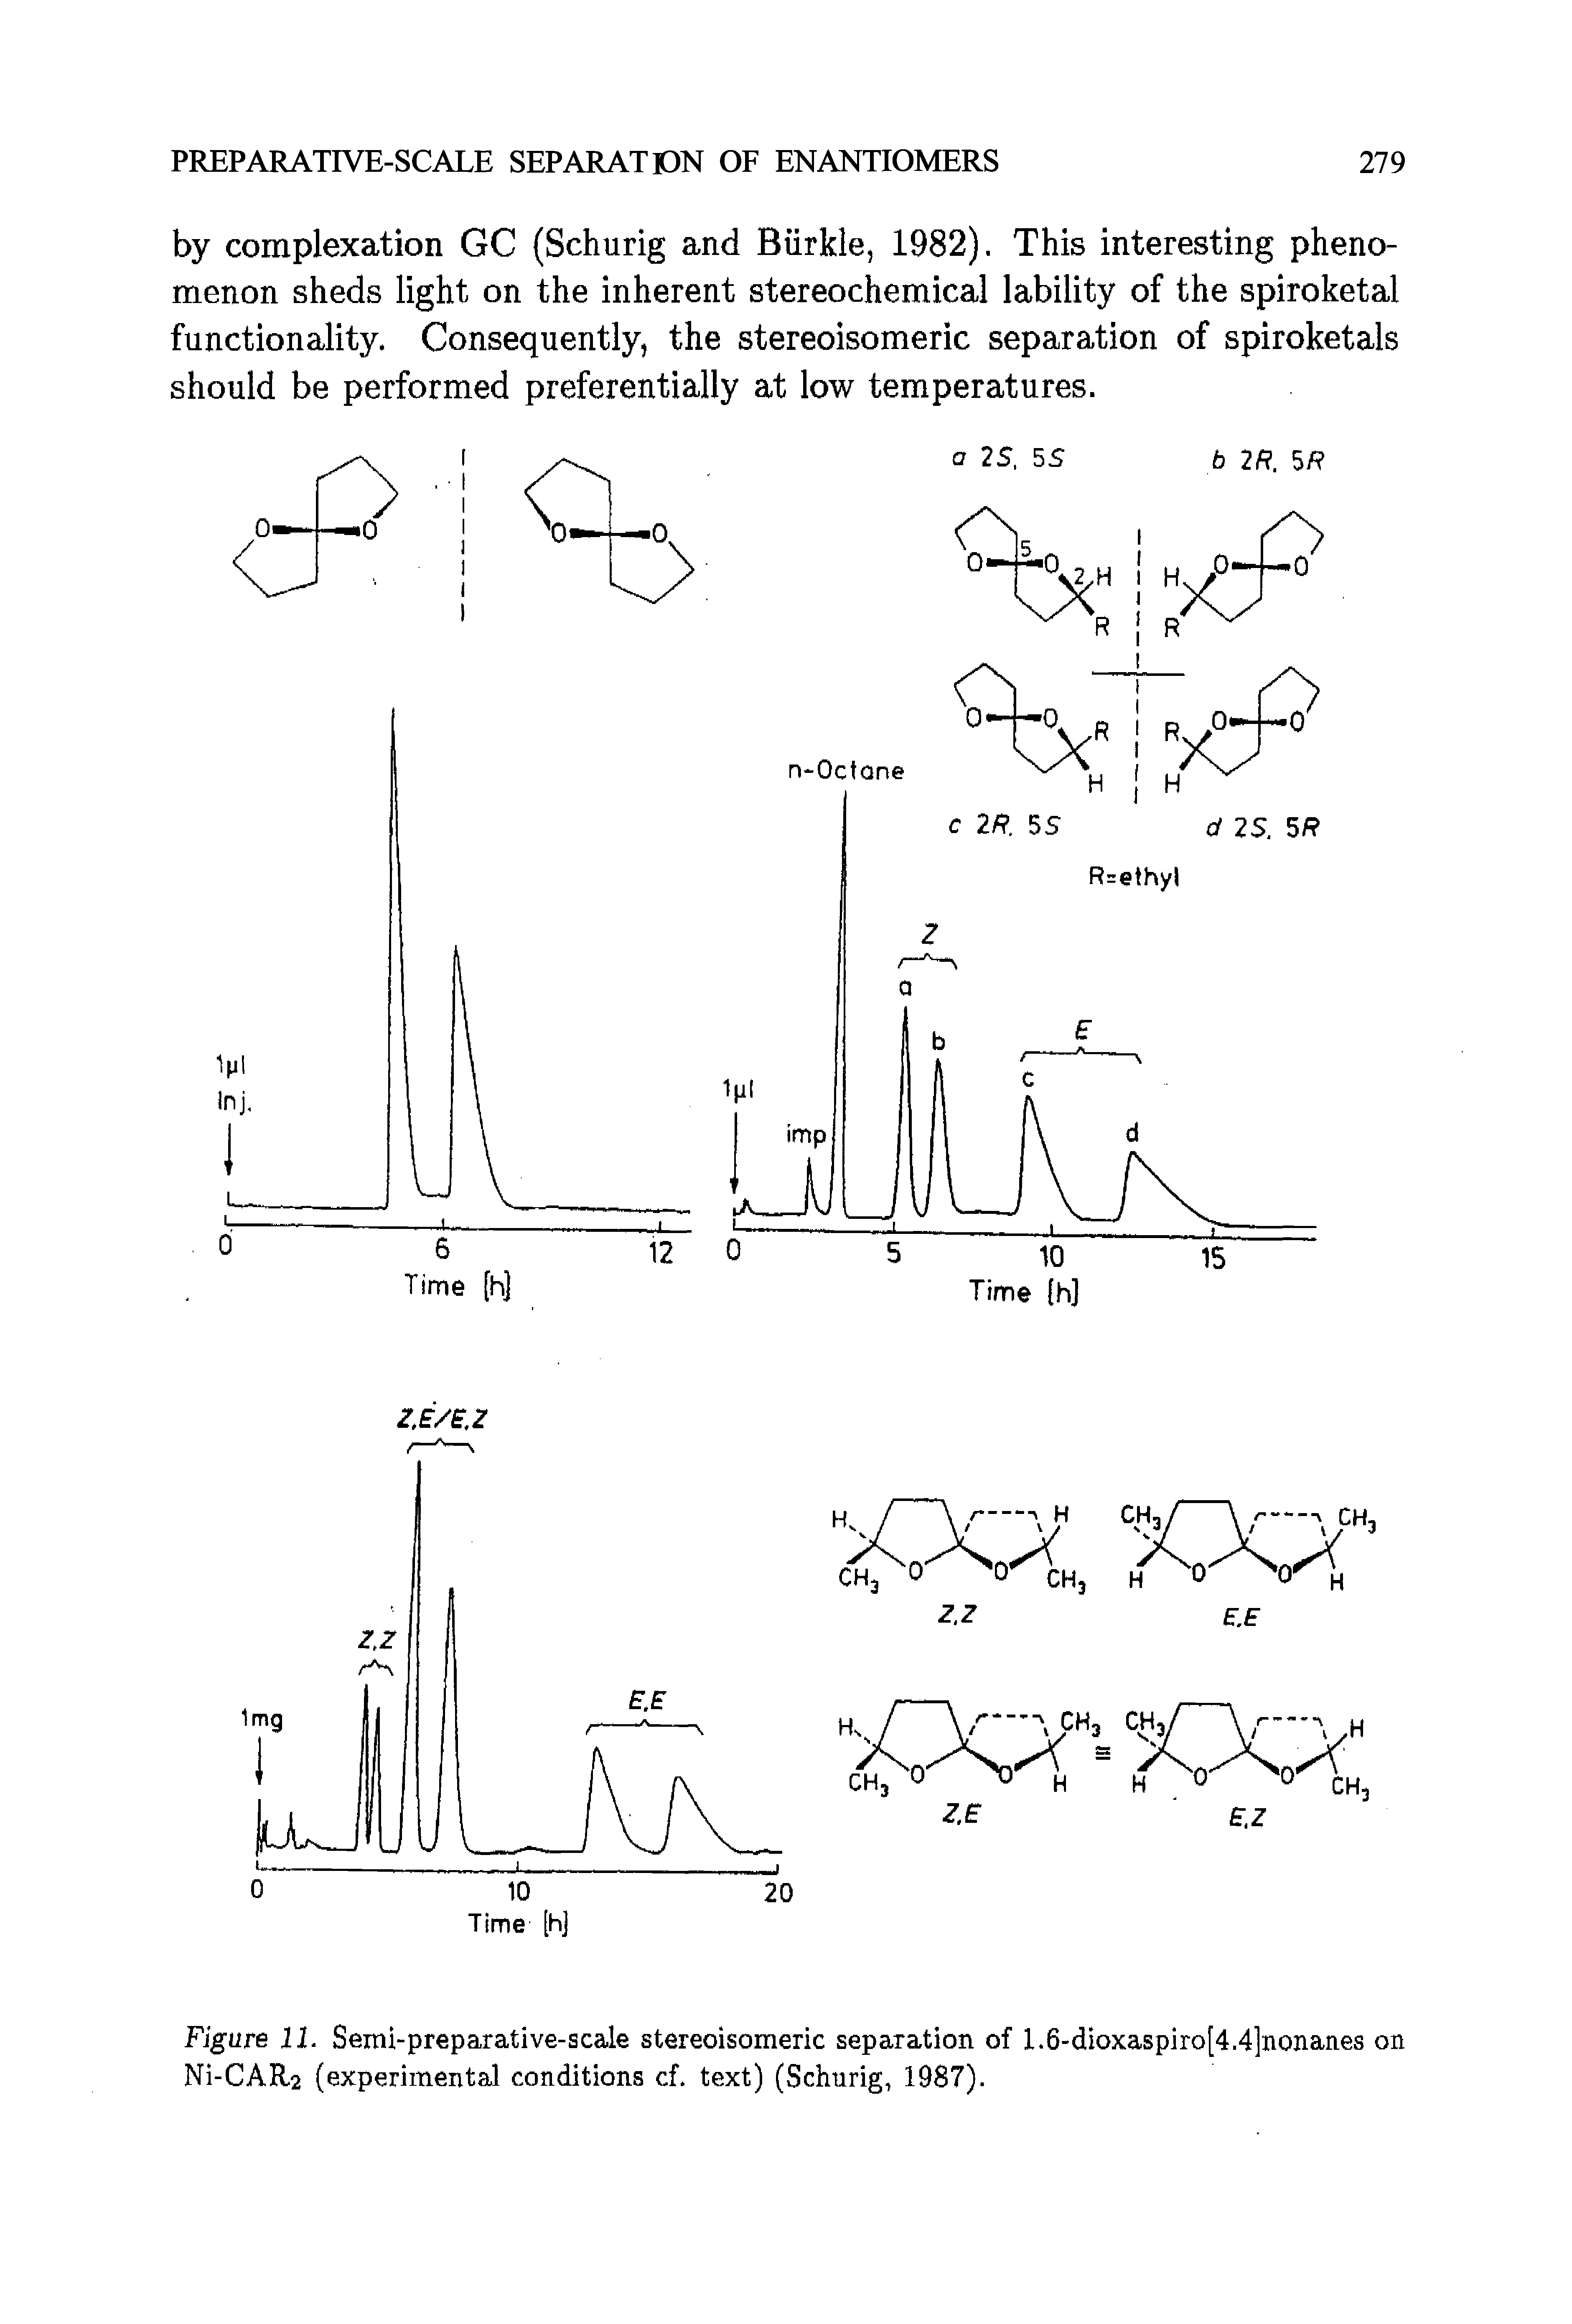 Figure 11. Semi-preparative-scale stereoisomeric separation of 1.6-dioxaspiro[4.4]nonanes on Ni-CAR2 (experimental conditions cf. text) (Schurig, 1987).